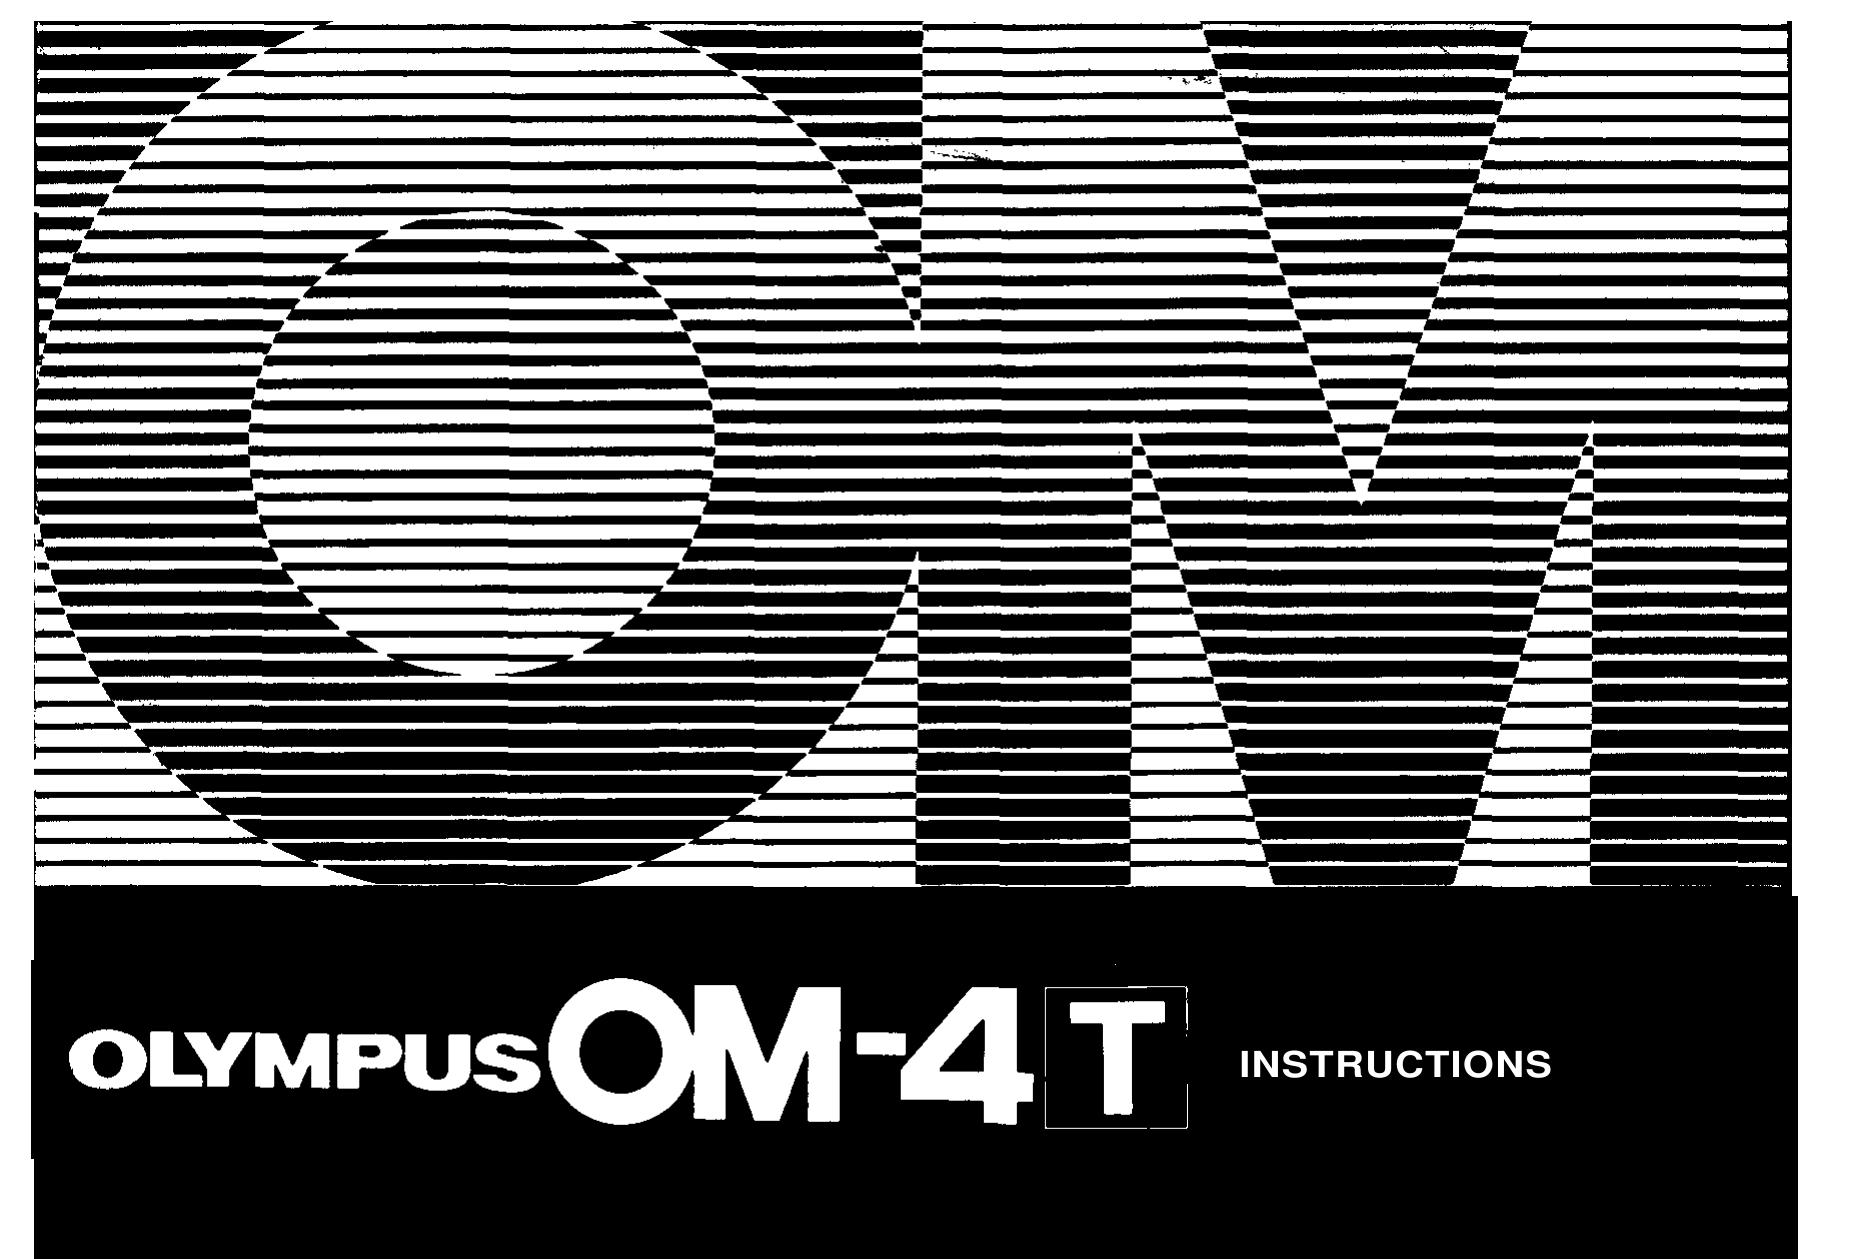 Olympus om-4t Film Camera User Manual